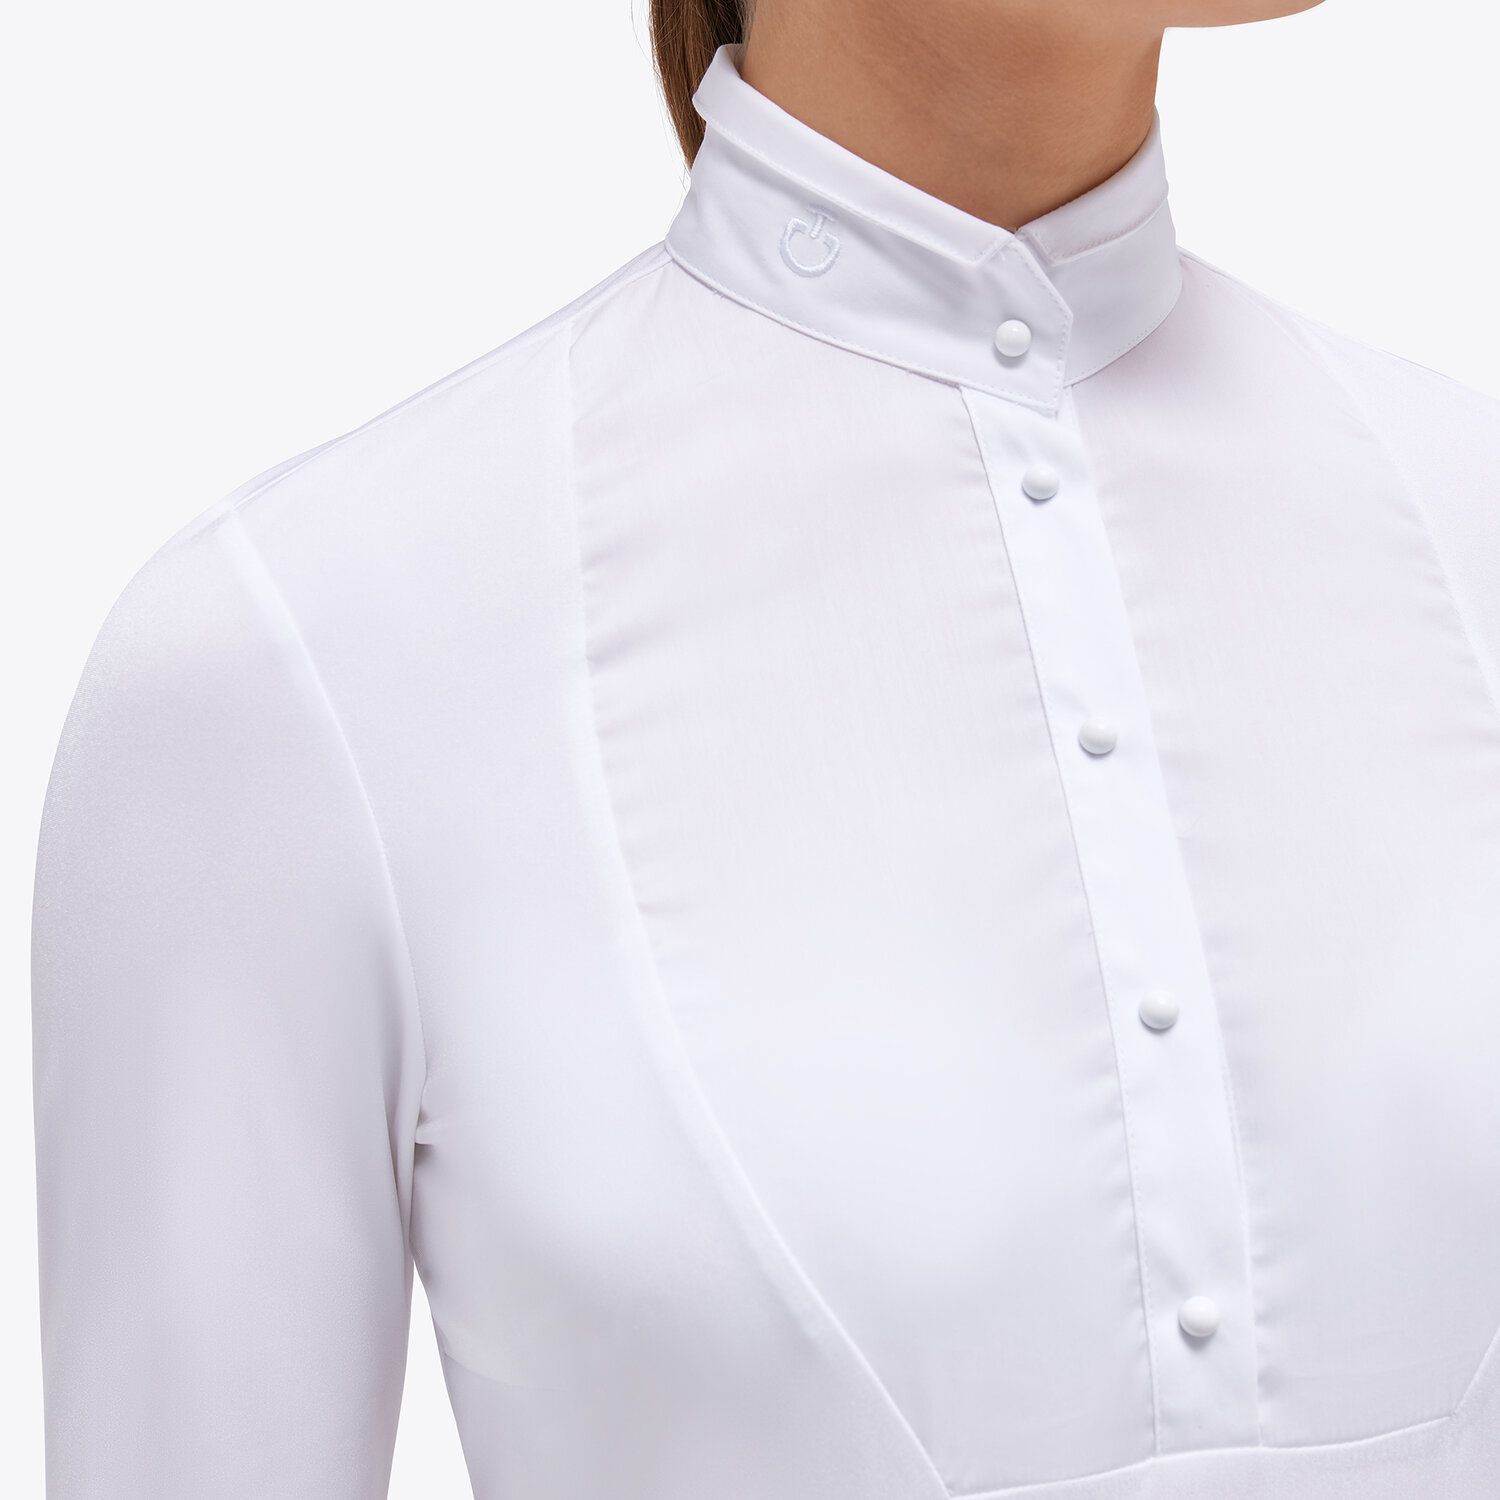 Cavalleria Toscana Women's competition shirt WHITE-6